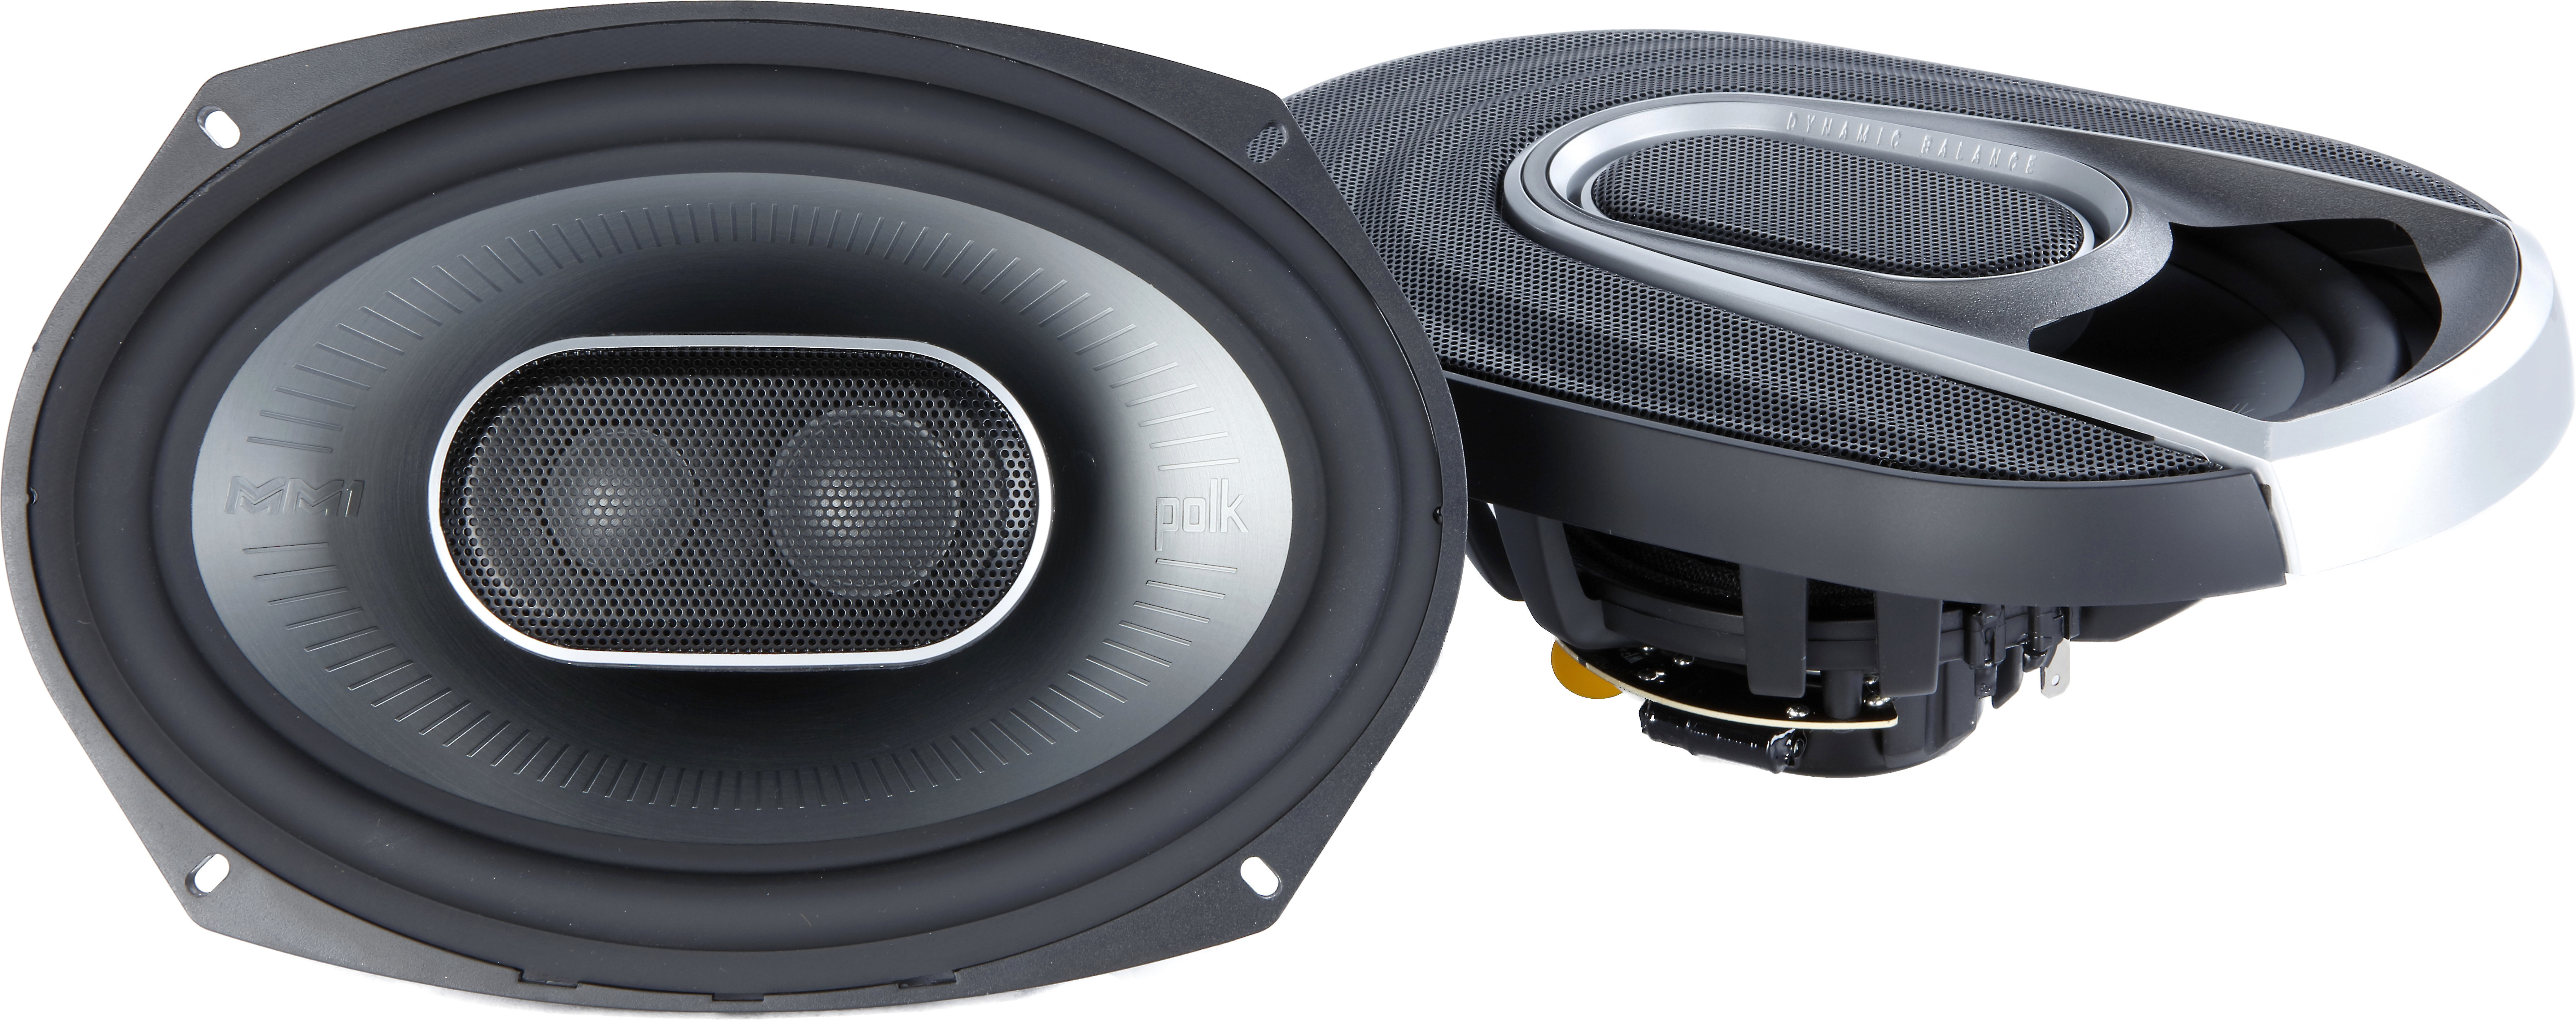 ma audio 6x9 speakers